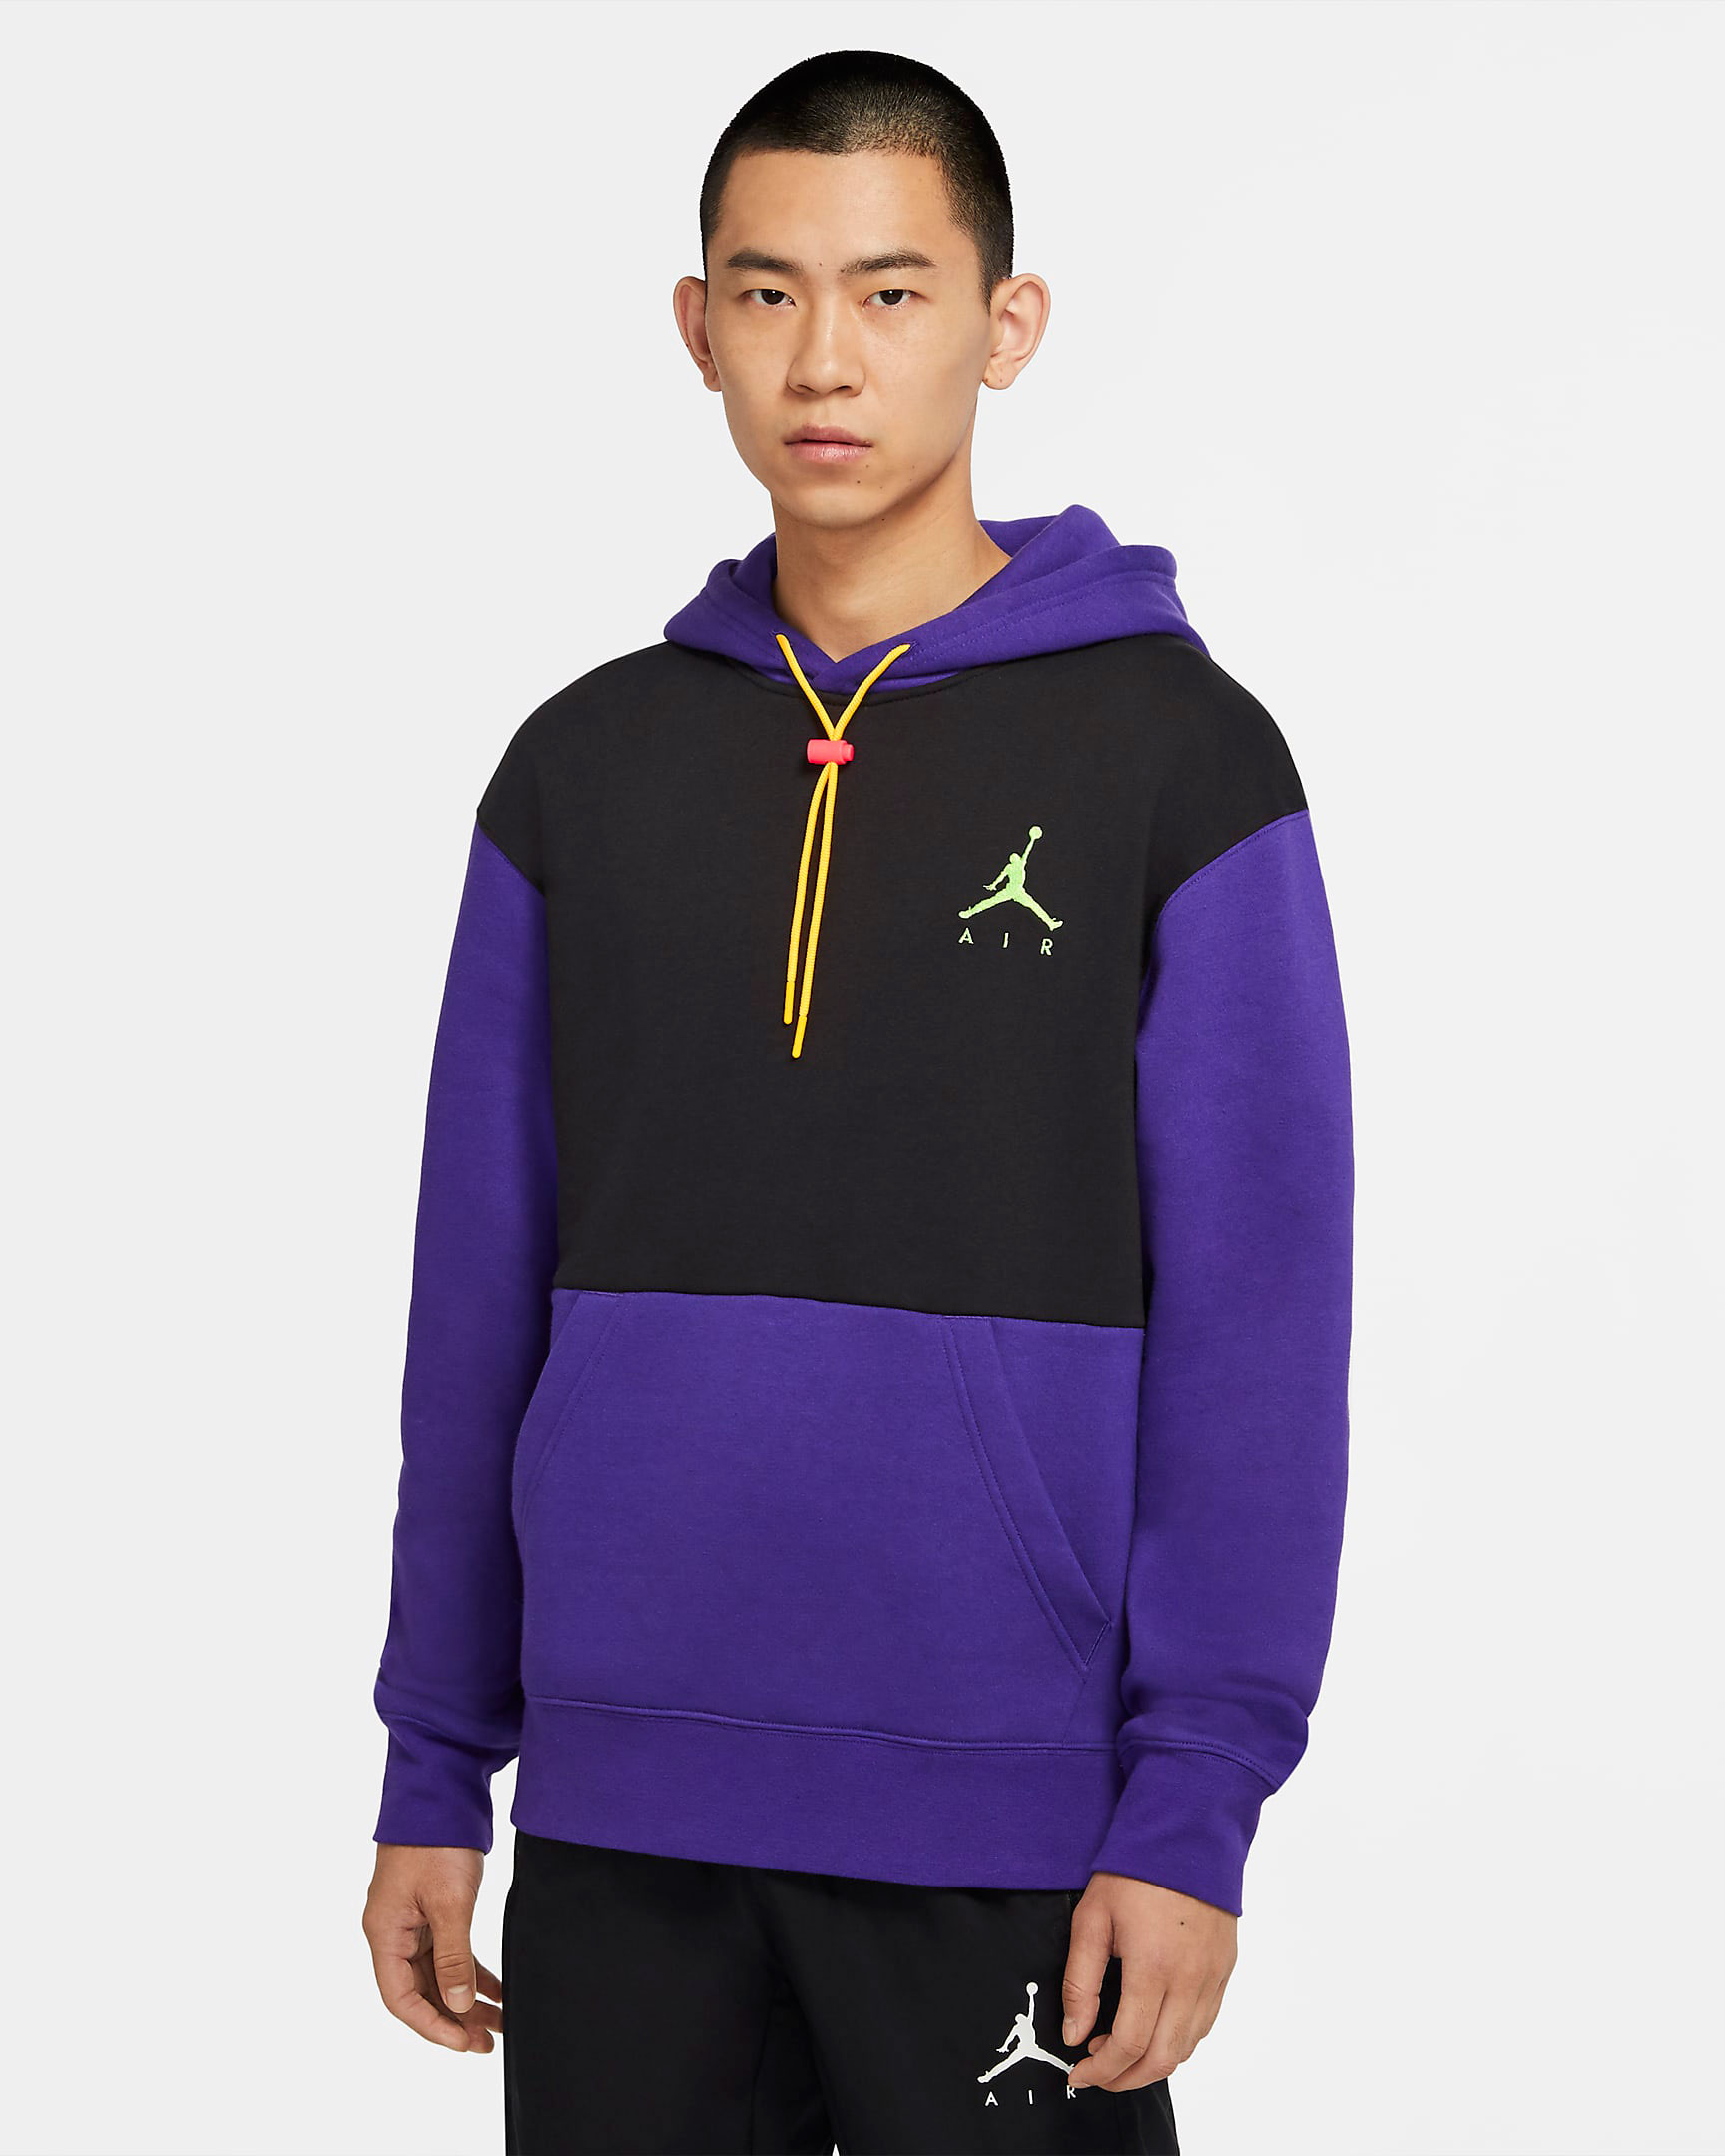 purple and white jordan hoodie,cheap 